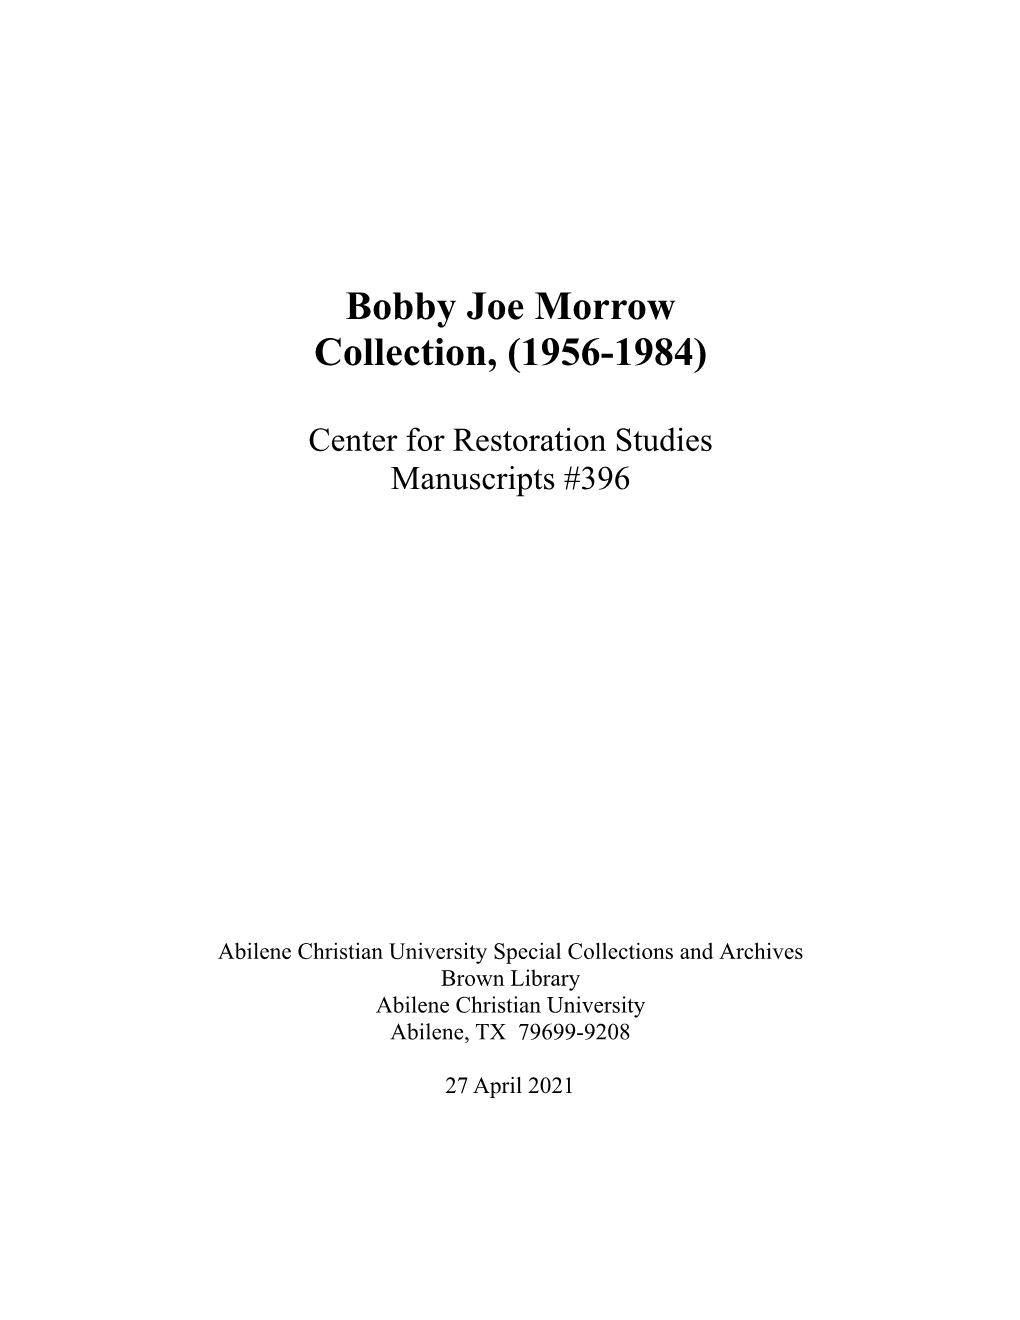 Bobby Joe Morrow Collection, (1956-1984)